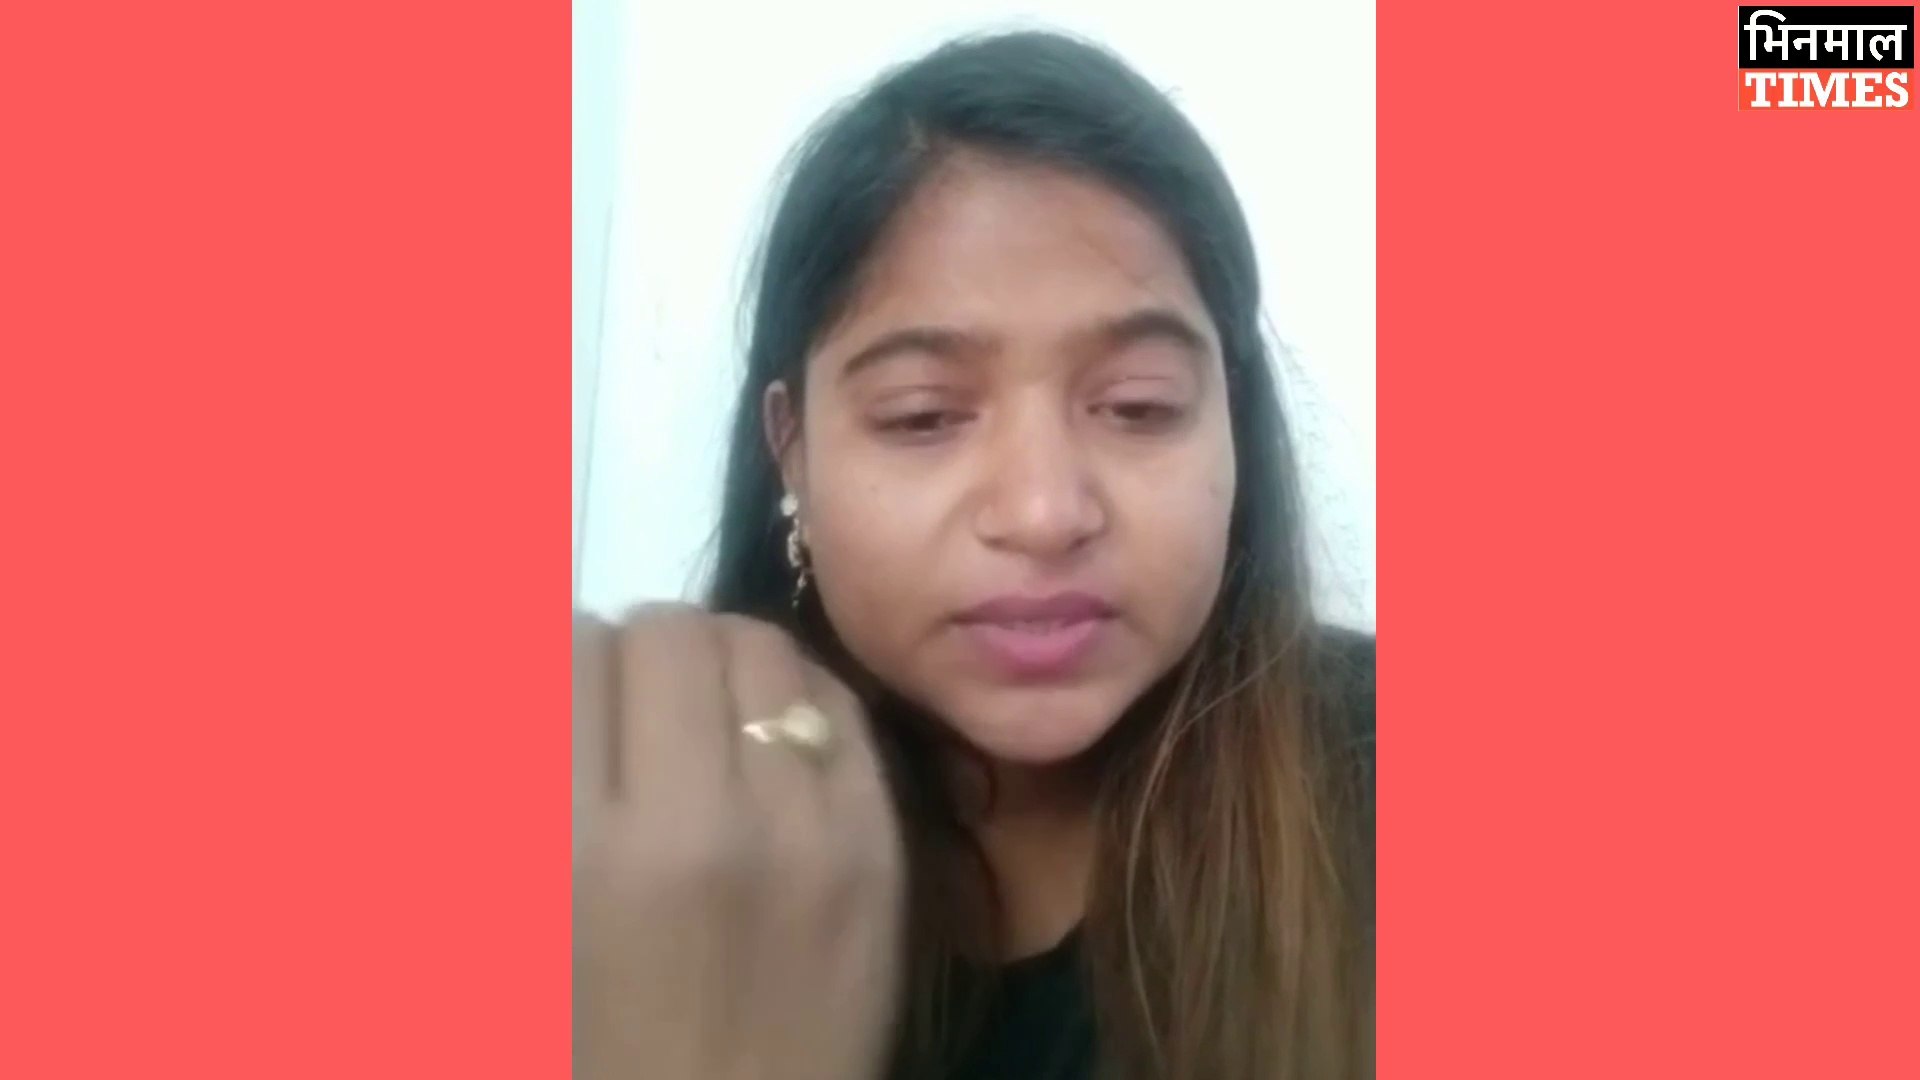 Mamta Rangili Ki Xxx Video - Rani Rangili à¤¨à¥‡ à¤•à¥à¤¯à¥‹à¤‚ à¤¬à¥‹à¤²à¤¾ à¤†à¤œ à¤®à¥‡à¤‚ à¤†à¤¤à¥à¤®à¤¹à¤¤à¥à¤¯à¤¾ à¤•à¤° à¤²à¥‚à¤à¤—à¥€ | Rani Rangili Live  Video | à¤°à¤¾à¤¨à¥€ à¤°à¤‚à¤—à¥€à¤²à¥€ à¤²à¤¾à¤ˆà¤µ - video Dailymotion